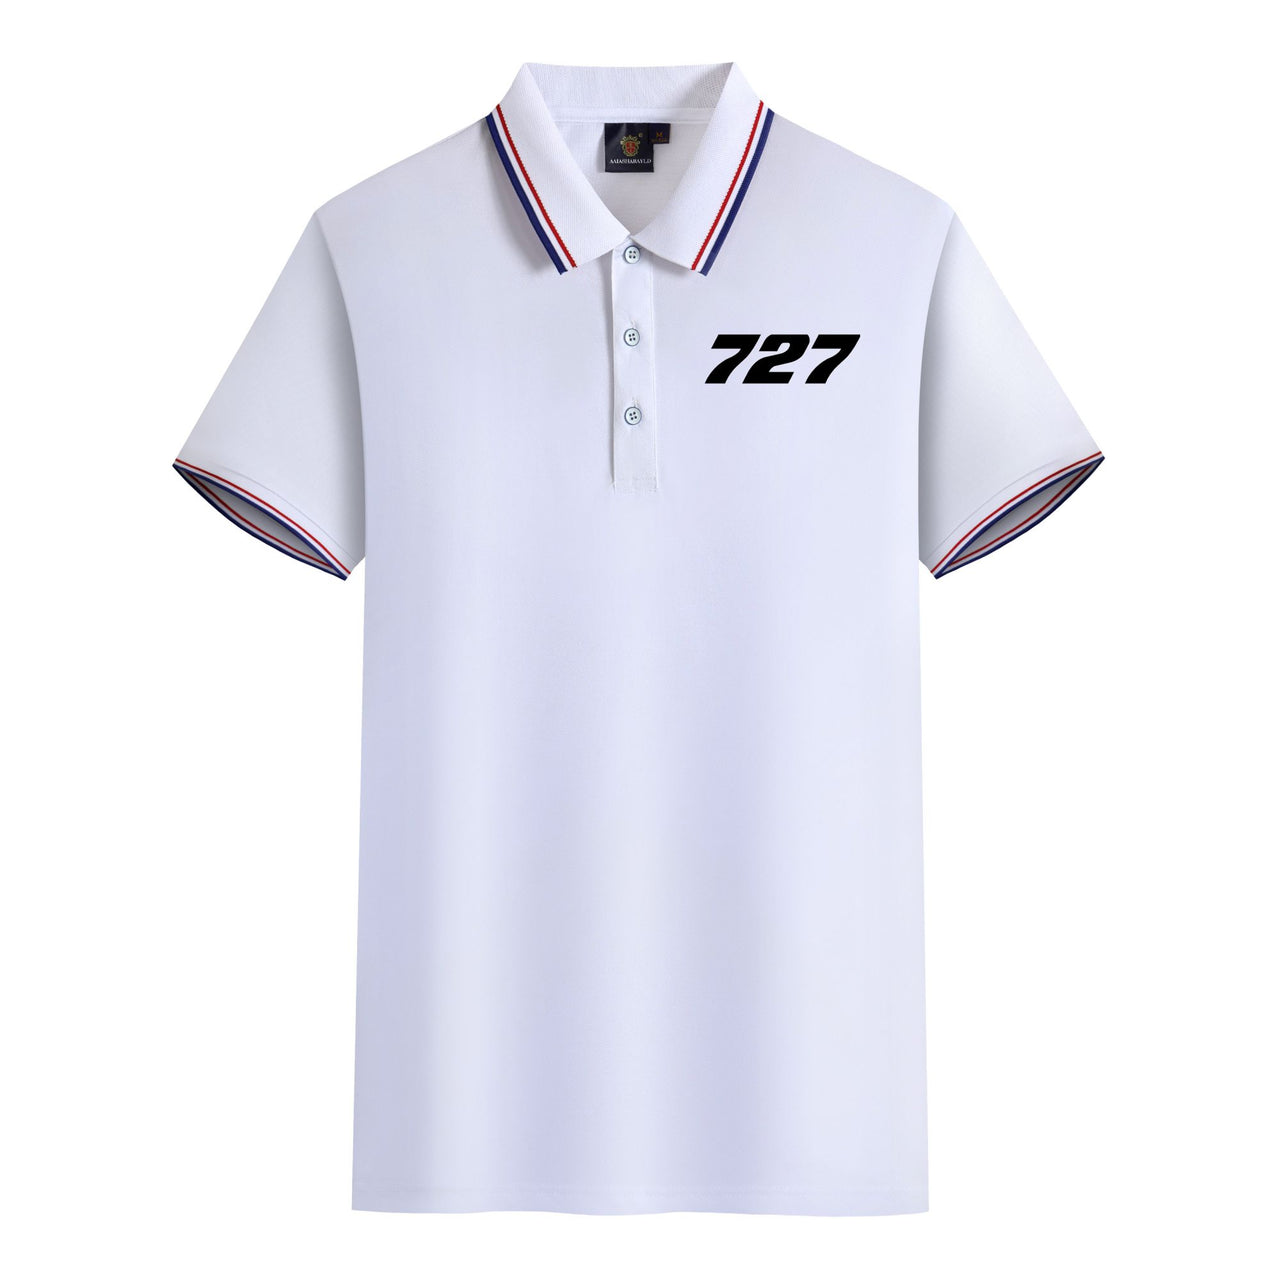 727 Flat Text Designed Stylish Polo T-Shirts